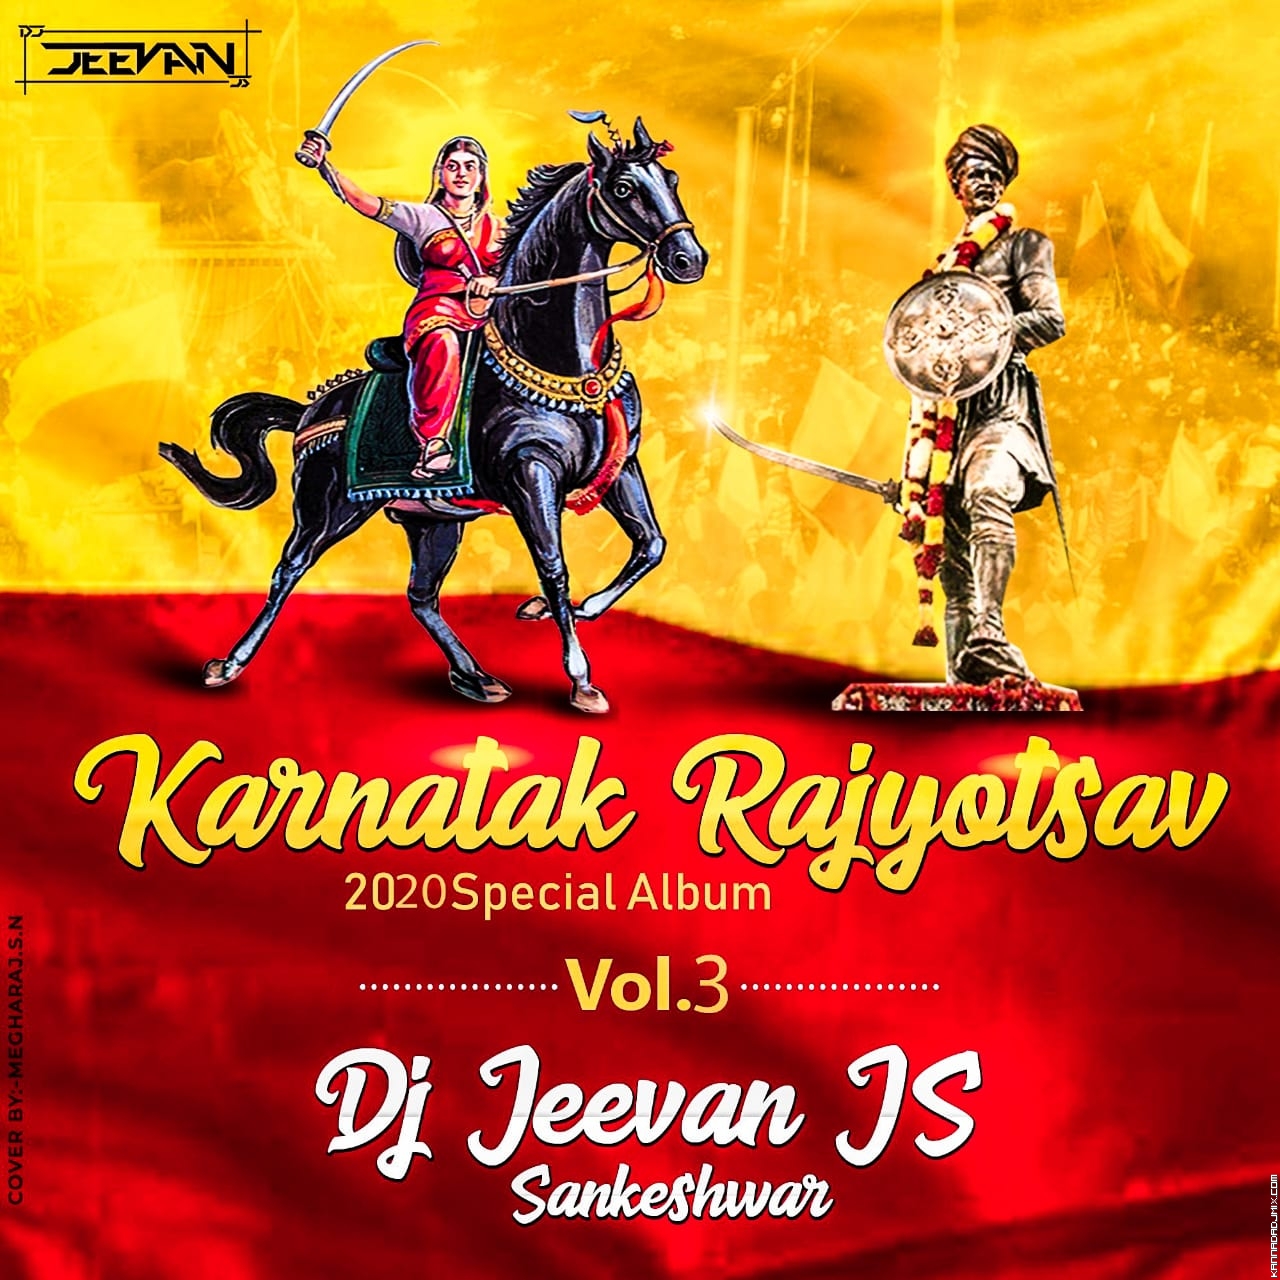 kittur Rani Channamage Jai Theme 2020 Mix by dj jeevan js sankeshwar.mp3